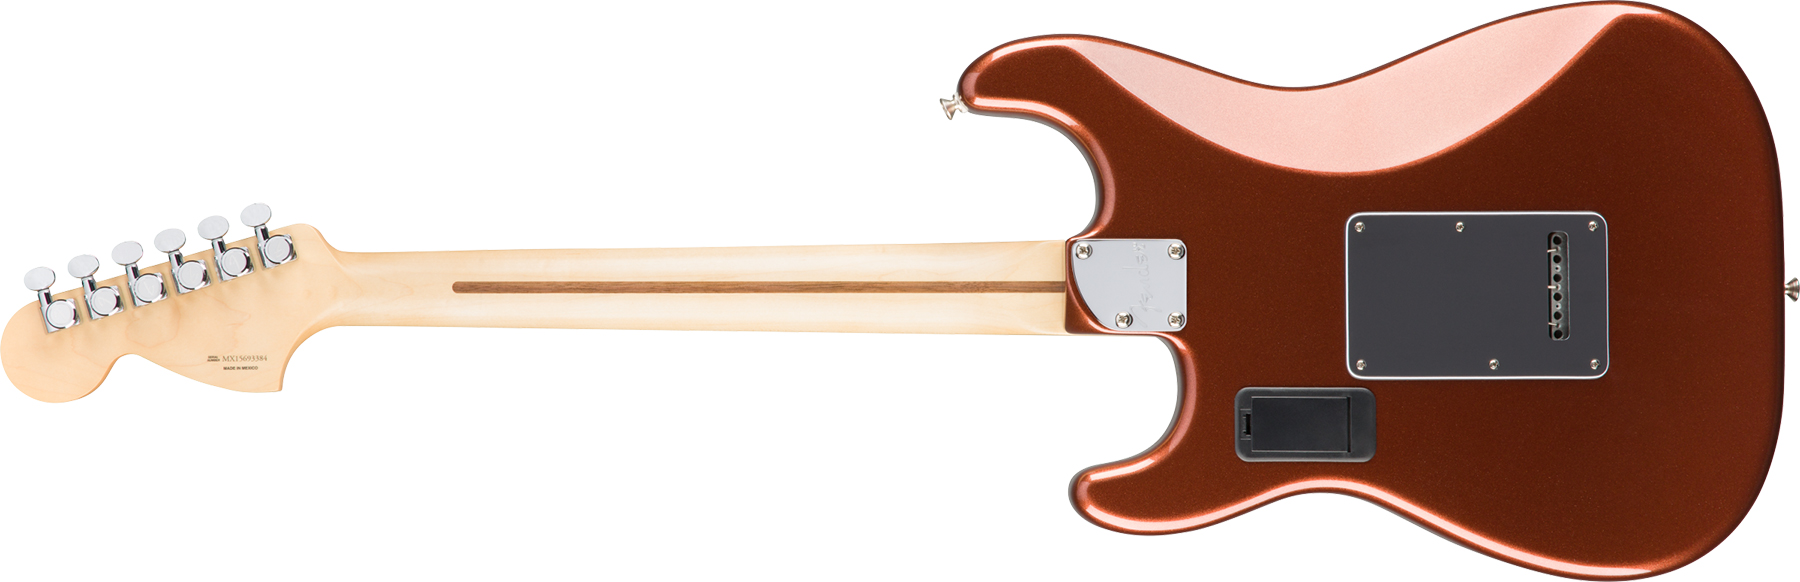 Fender Strat Deluxe Roadhouse Mex Mn - Classic Copper - E-Gitarre in Str-Form - Variation 1